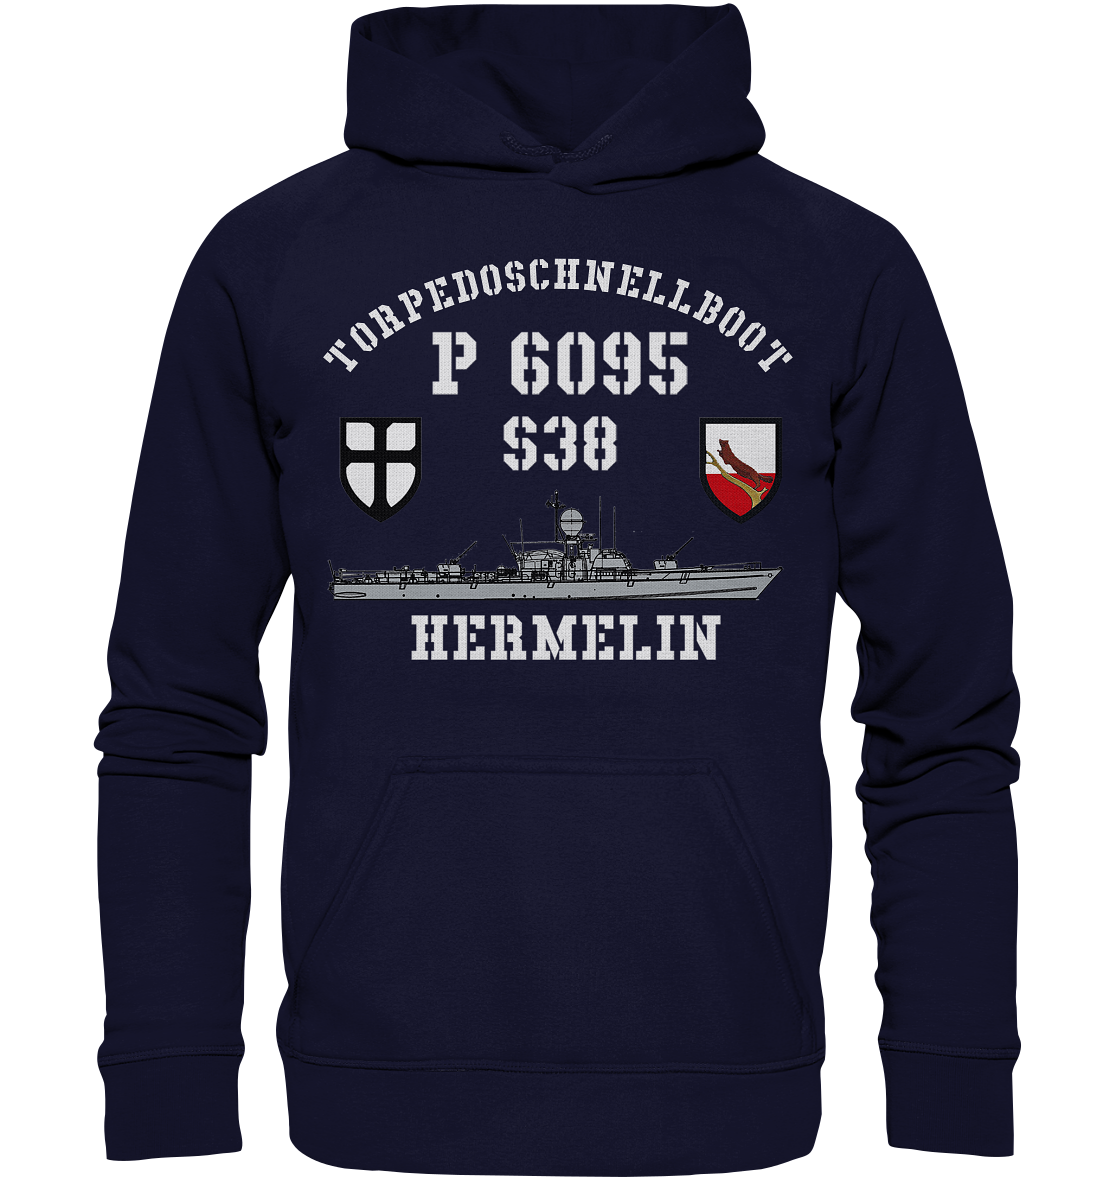 S38 HERMELIN - Basic Unisex Hoodie XL